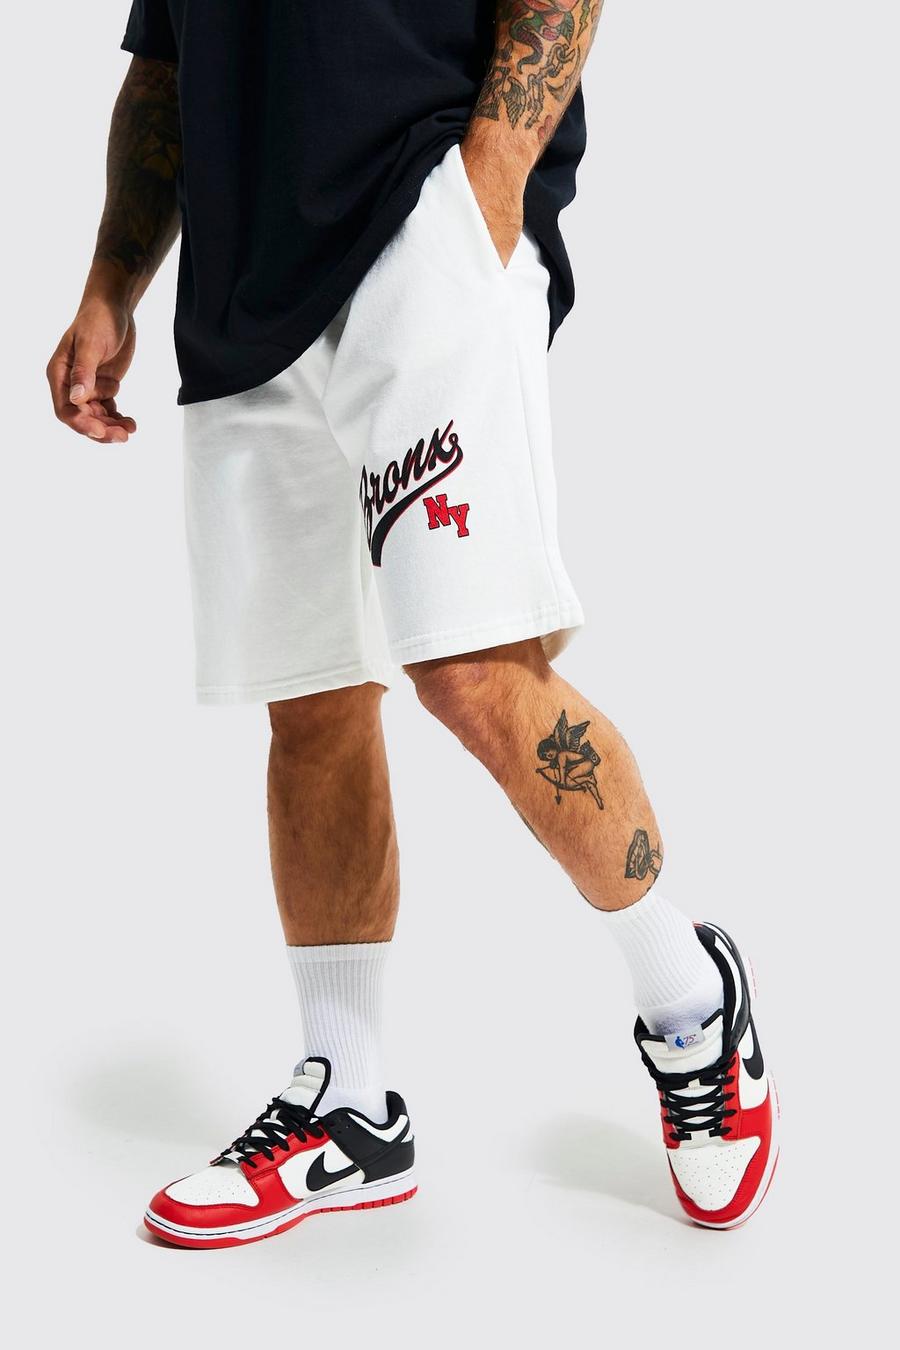 Pantalón corto holgado de tela jersey con estampado de Bronks Collegiate, White blanco